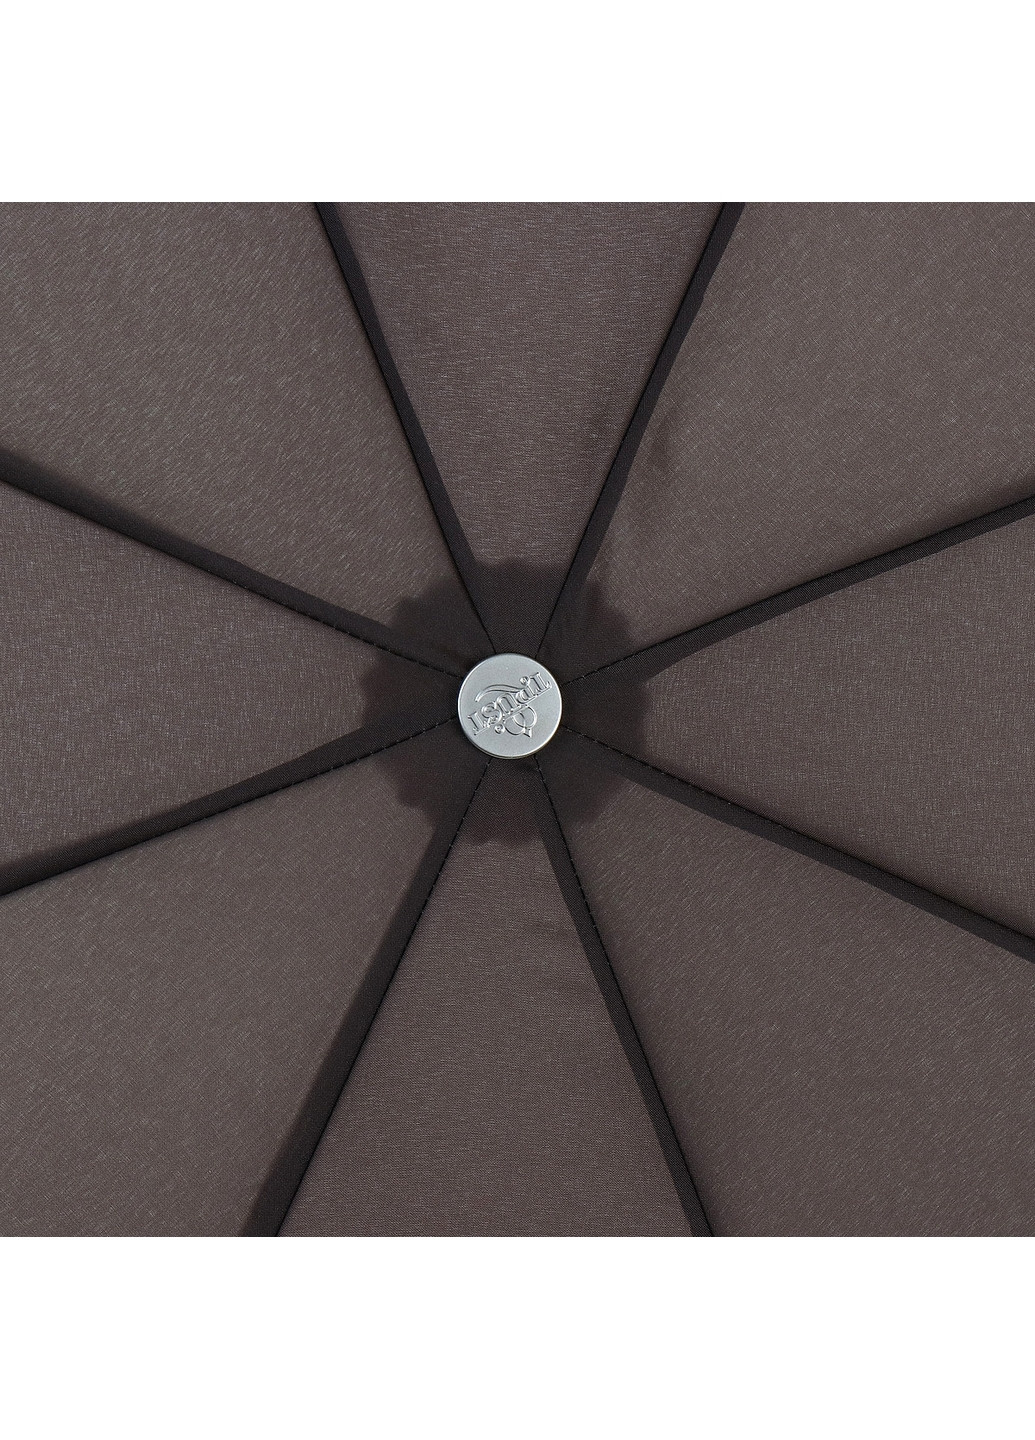 Жіноча складна парасолька автомат 102 см Trust (260329600)